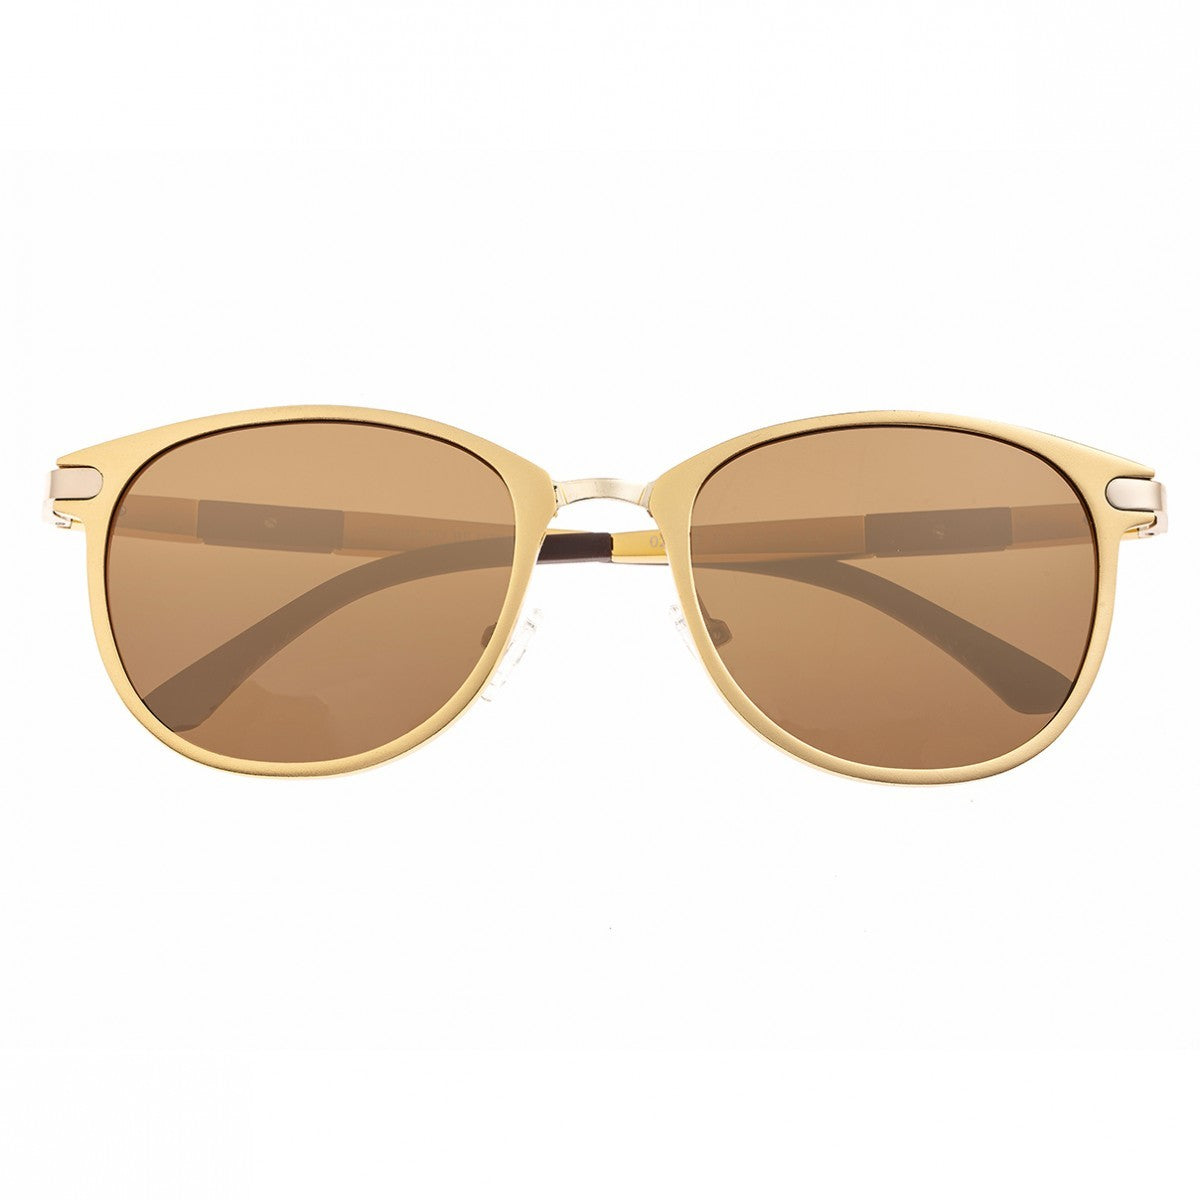 Breed Orion Aluminium Polarized Sunglasses - Gold/Brown - BSG020GD